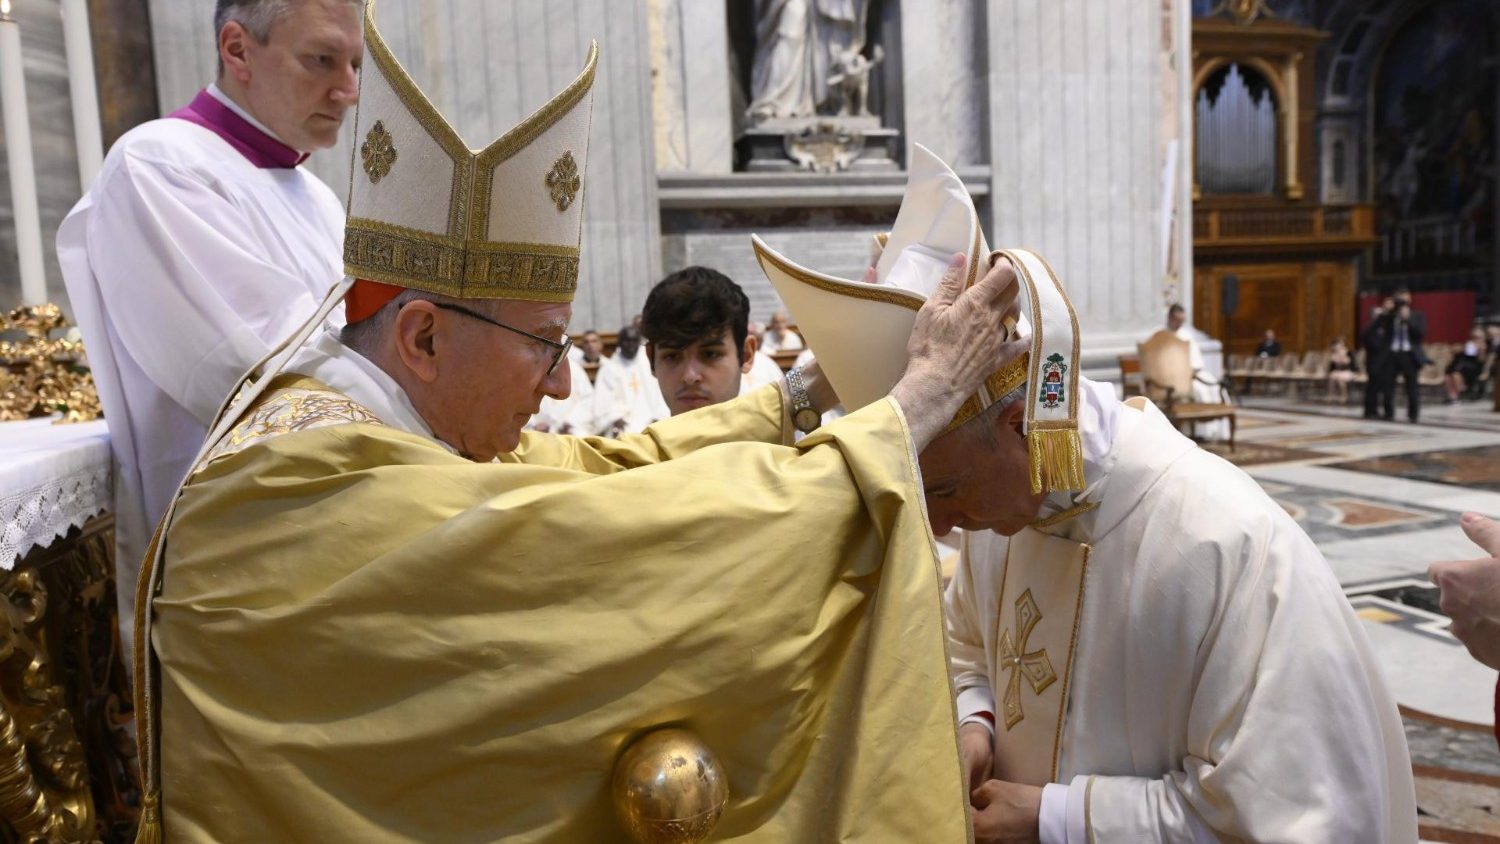 Cardinal Parolin says: “A bishop lays down his life for his flock.”